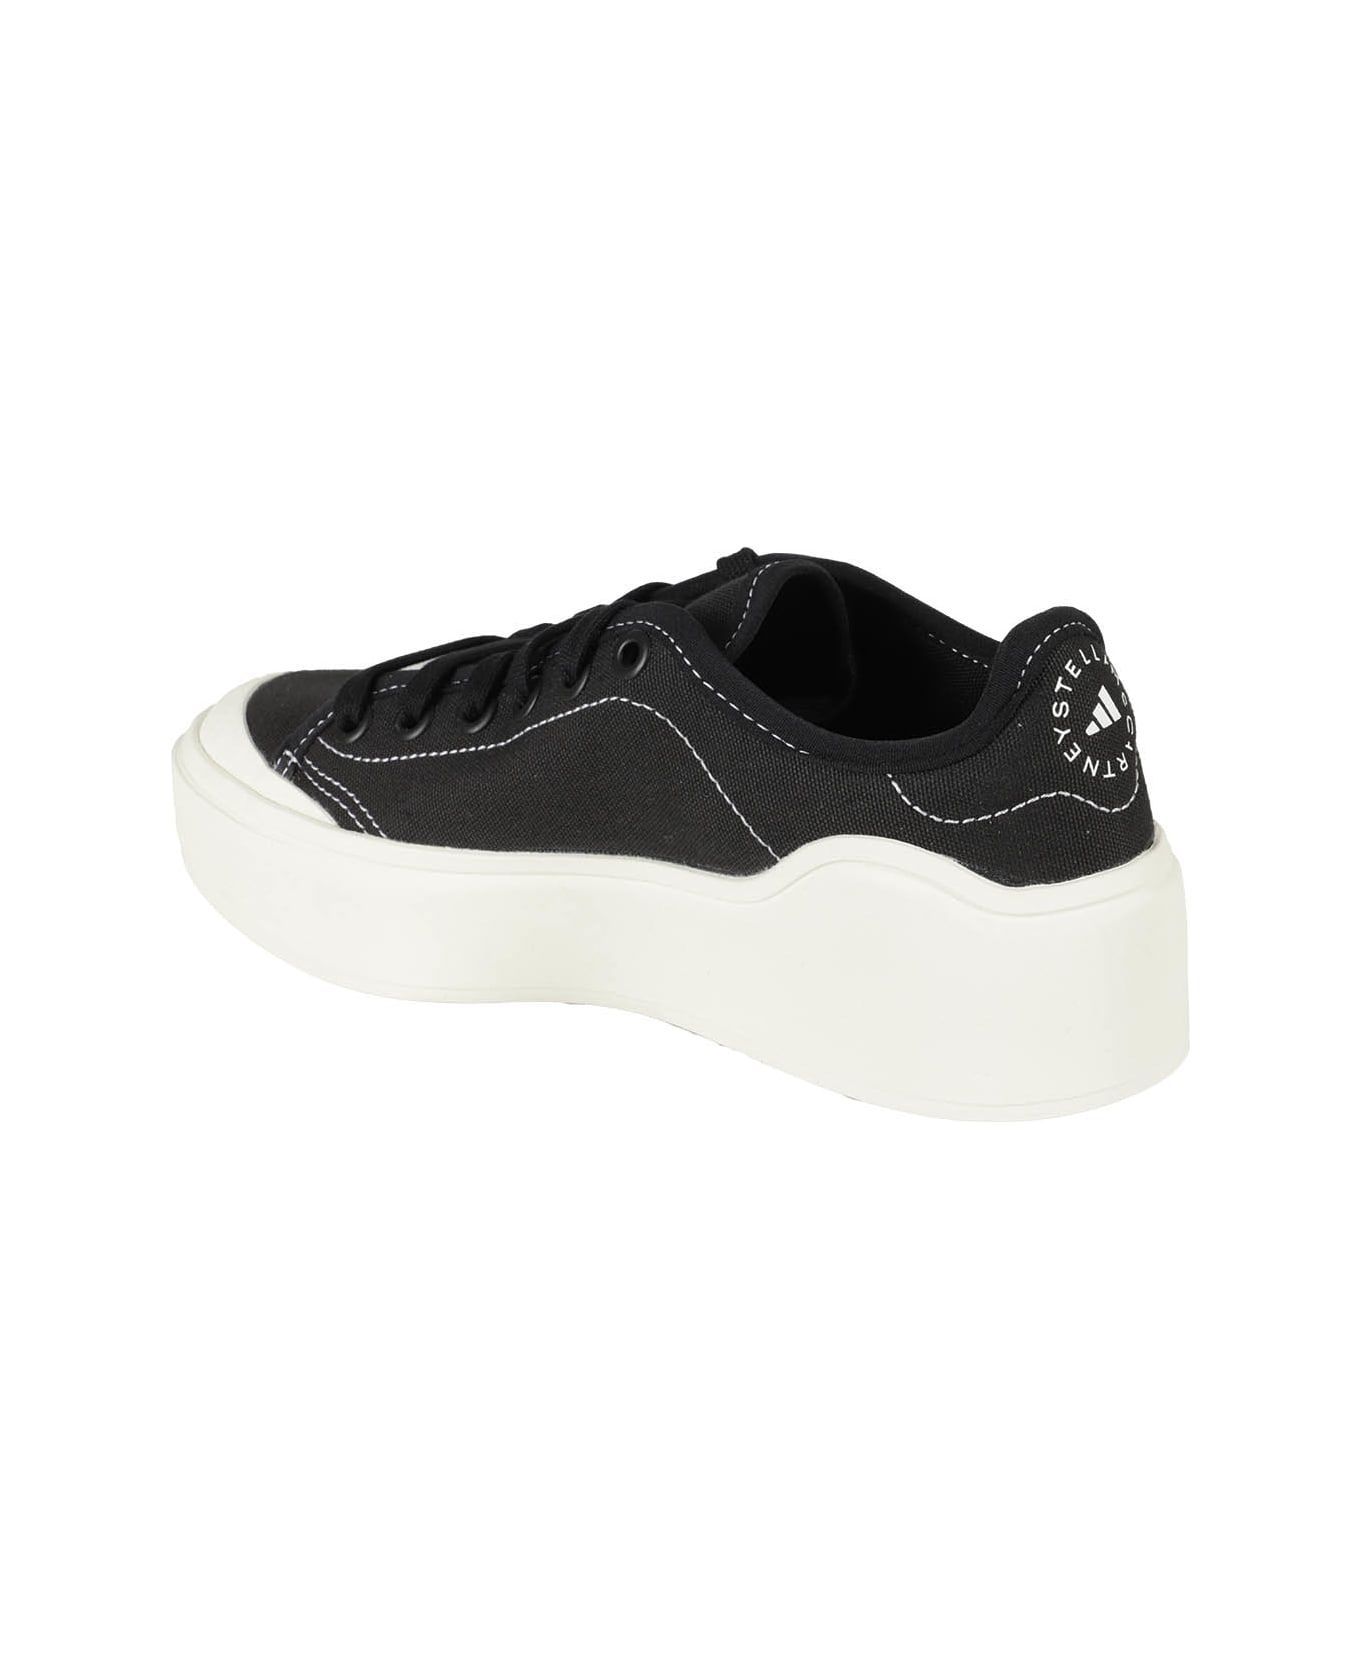 Adidas by Stella McCartney Asmc Court Cotton - Black White ウェッジシューズ